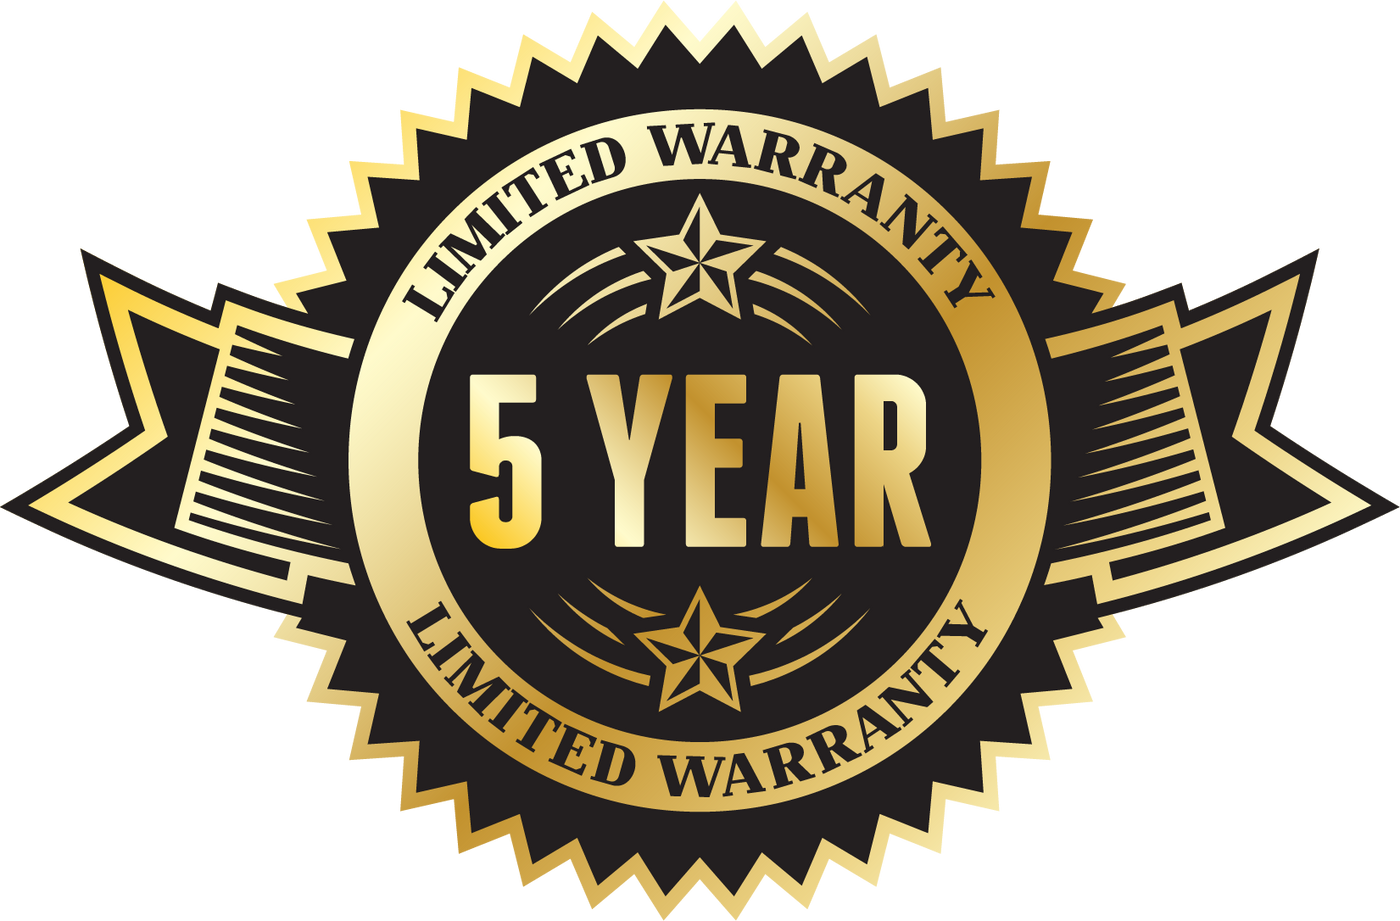 FREE POWERCHUTE® 5 Year Extended Warranty